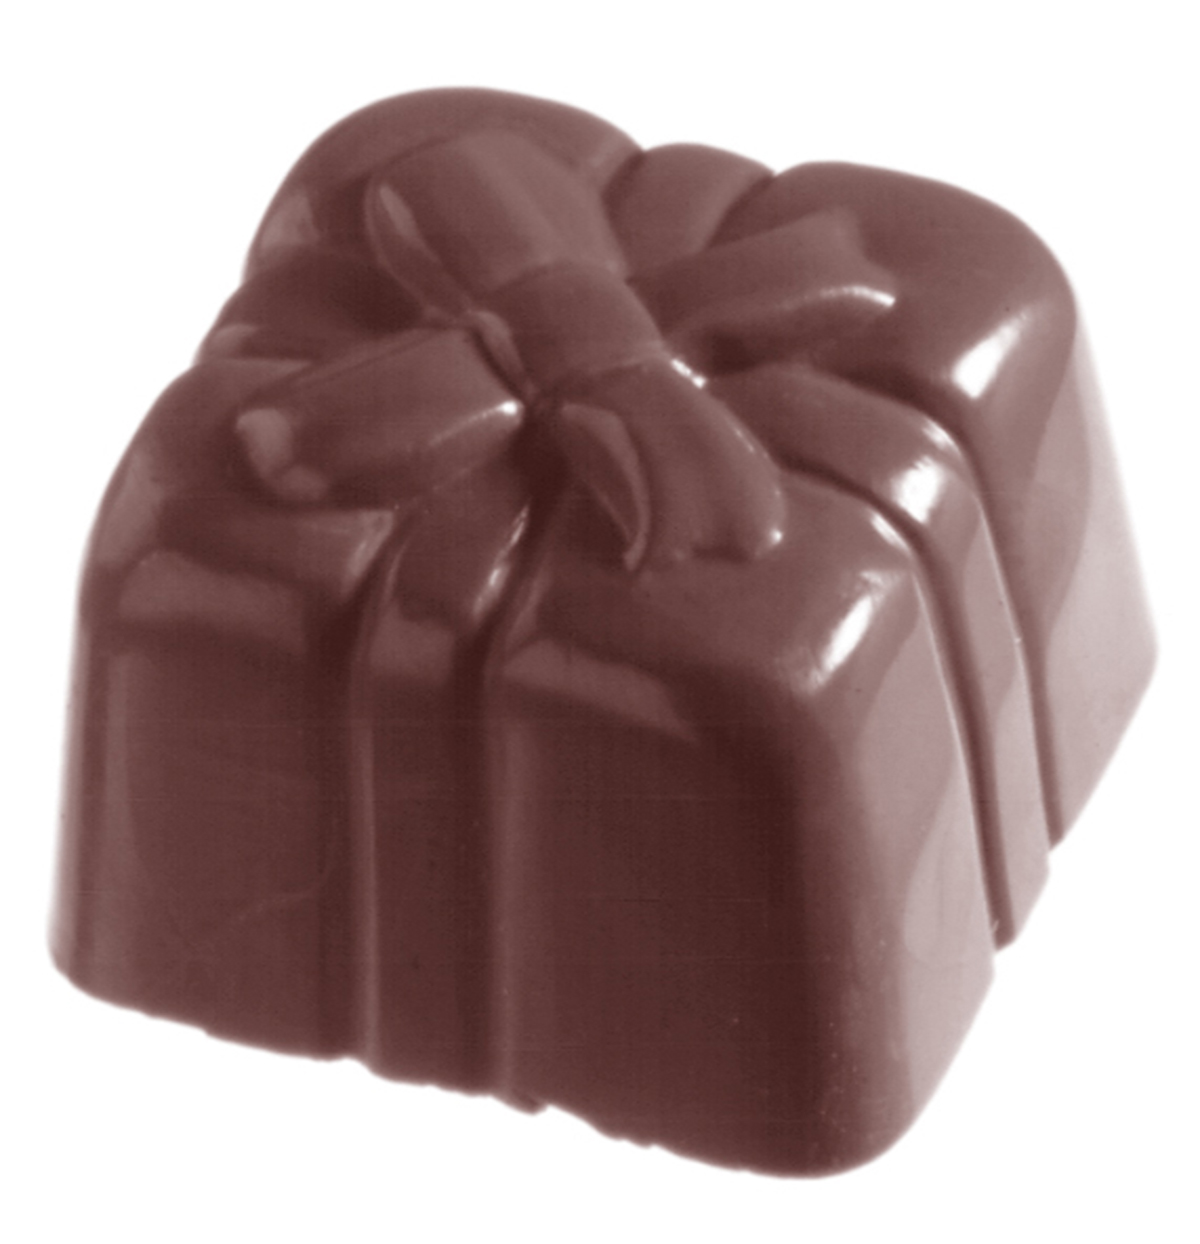 Professionel chokoladeform i polycarbonat - Present CW1036